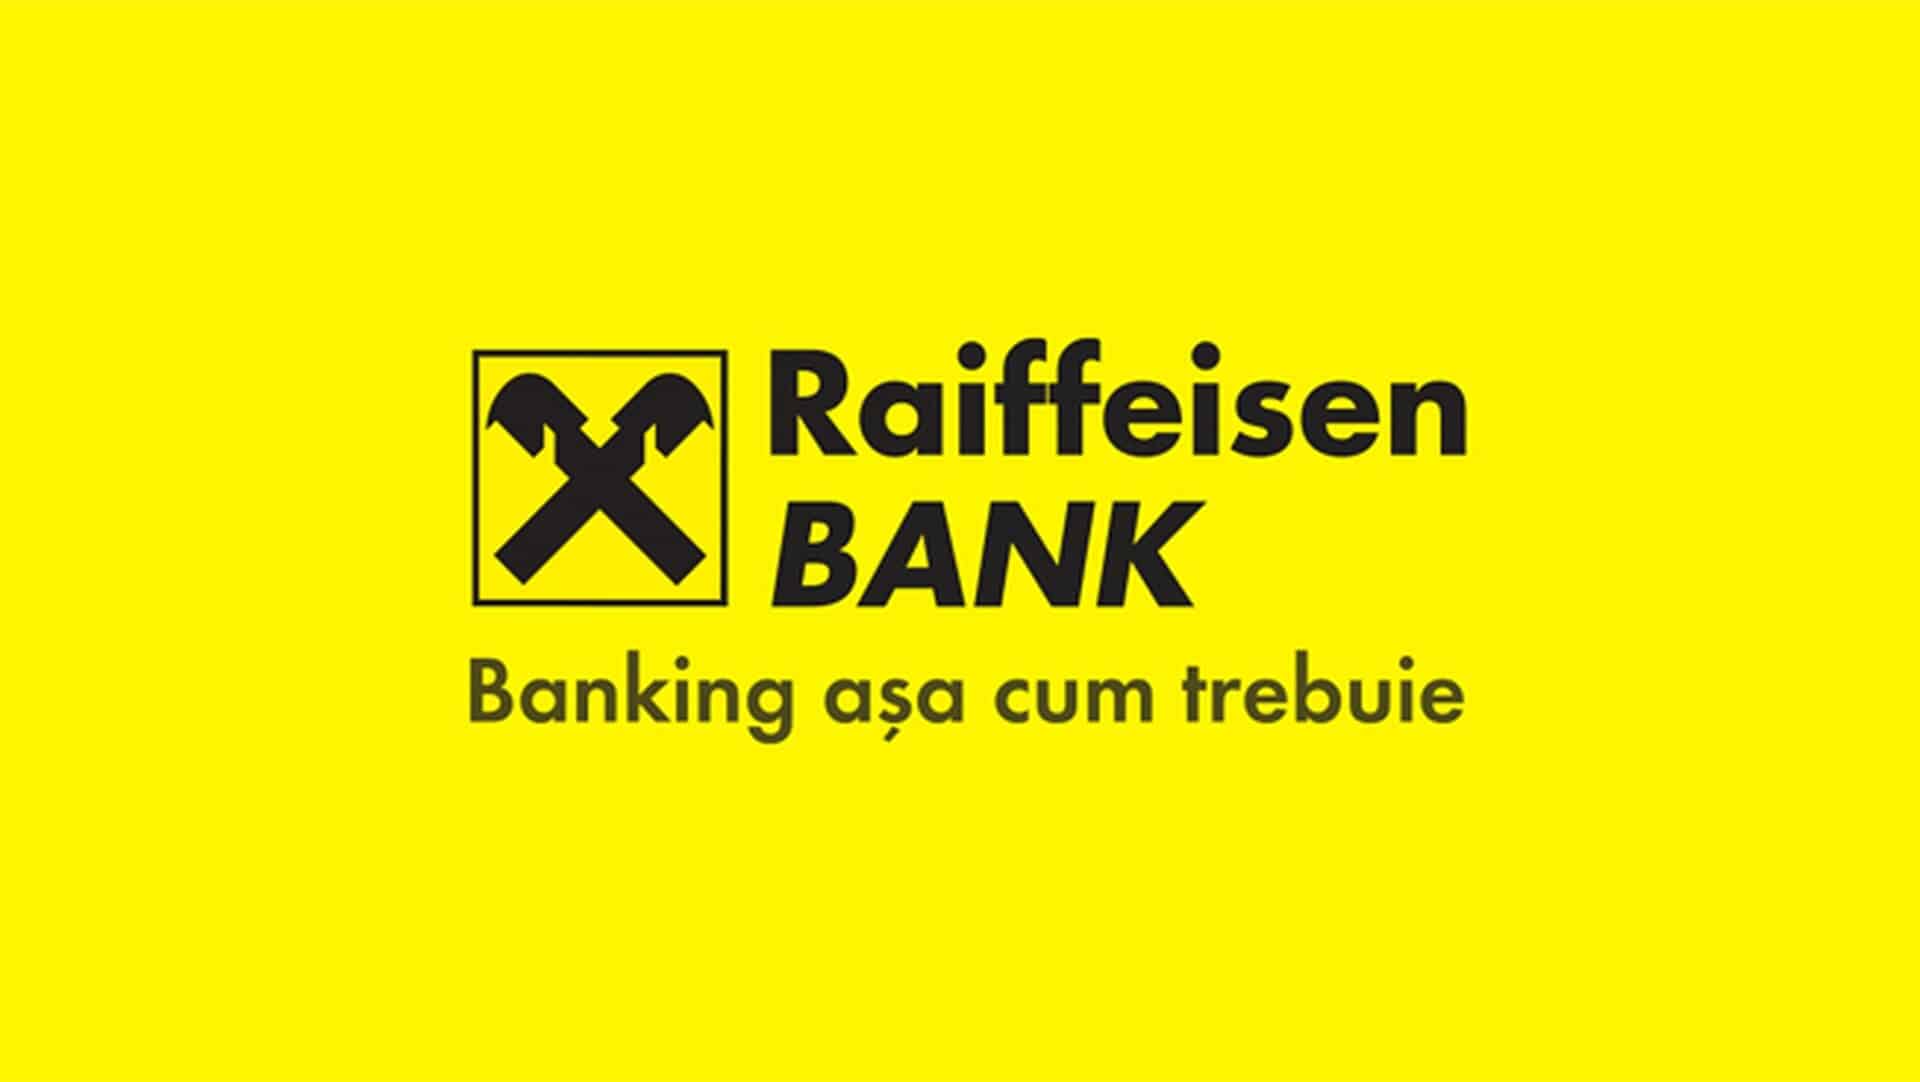 raiffeisen-bank:-Αυστηρή-προειδοποίηση-hΠΑ-στην-αυστριακή-τράπεζα-για-συναλλαγές-με-Ρωσία